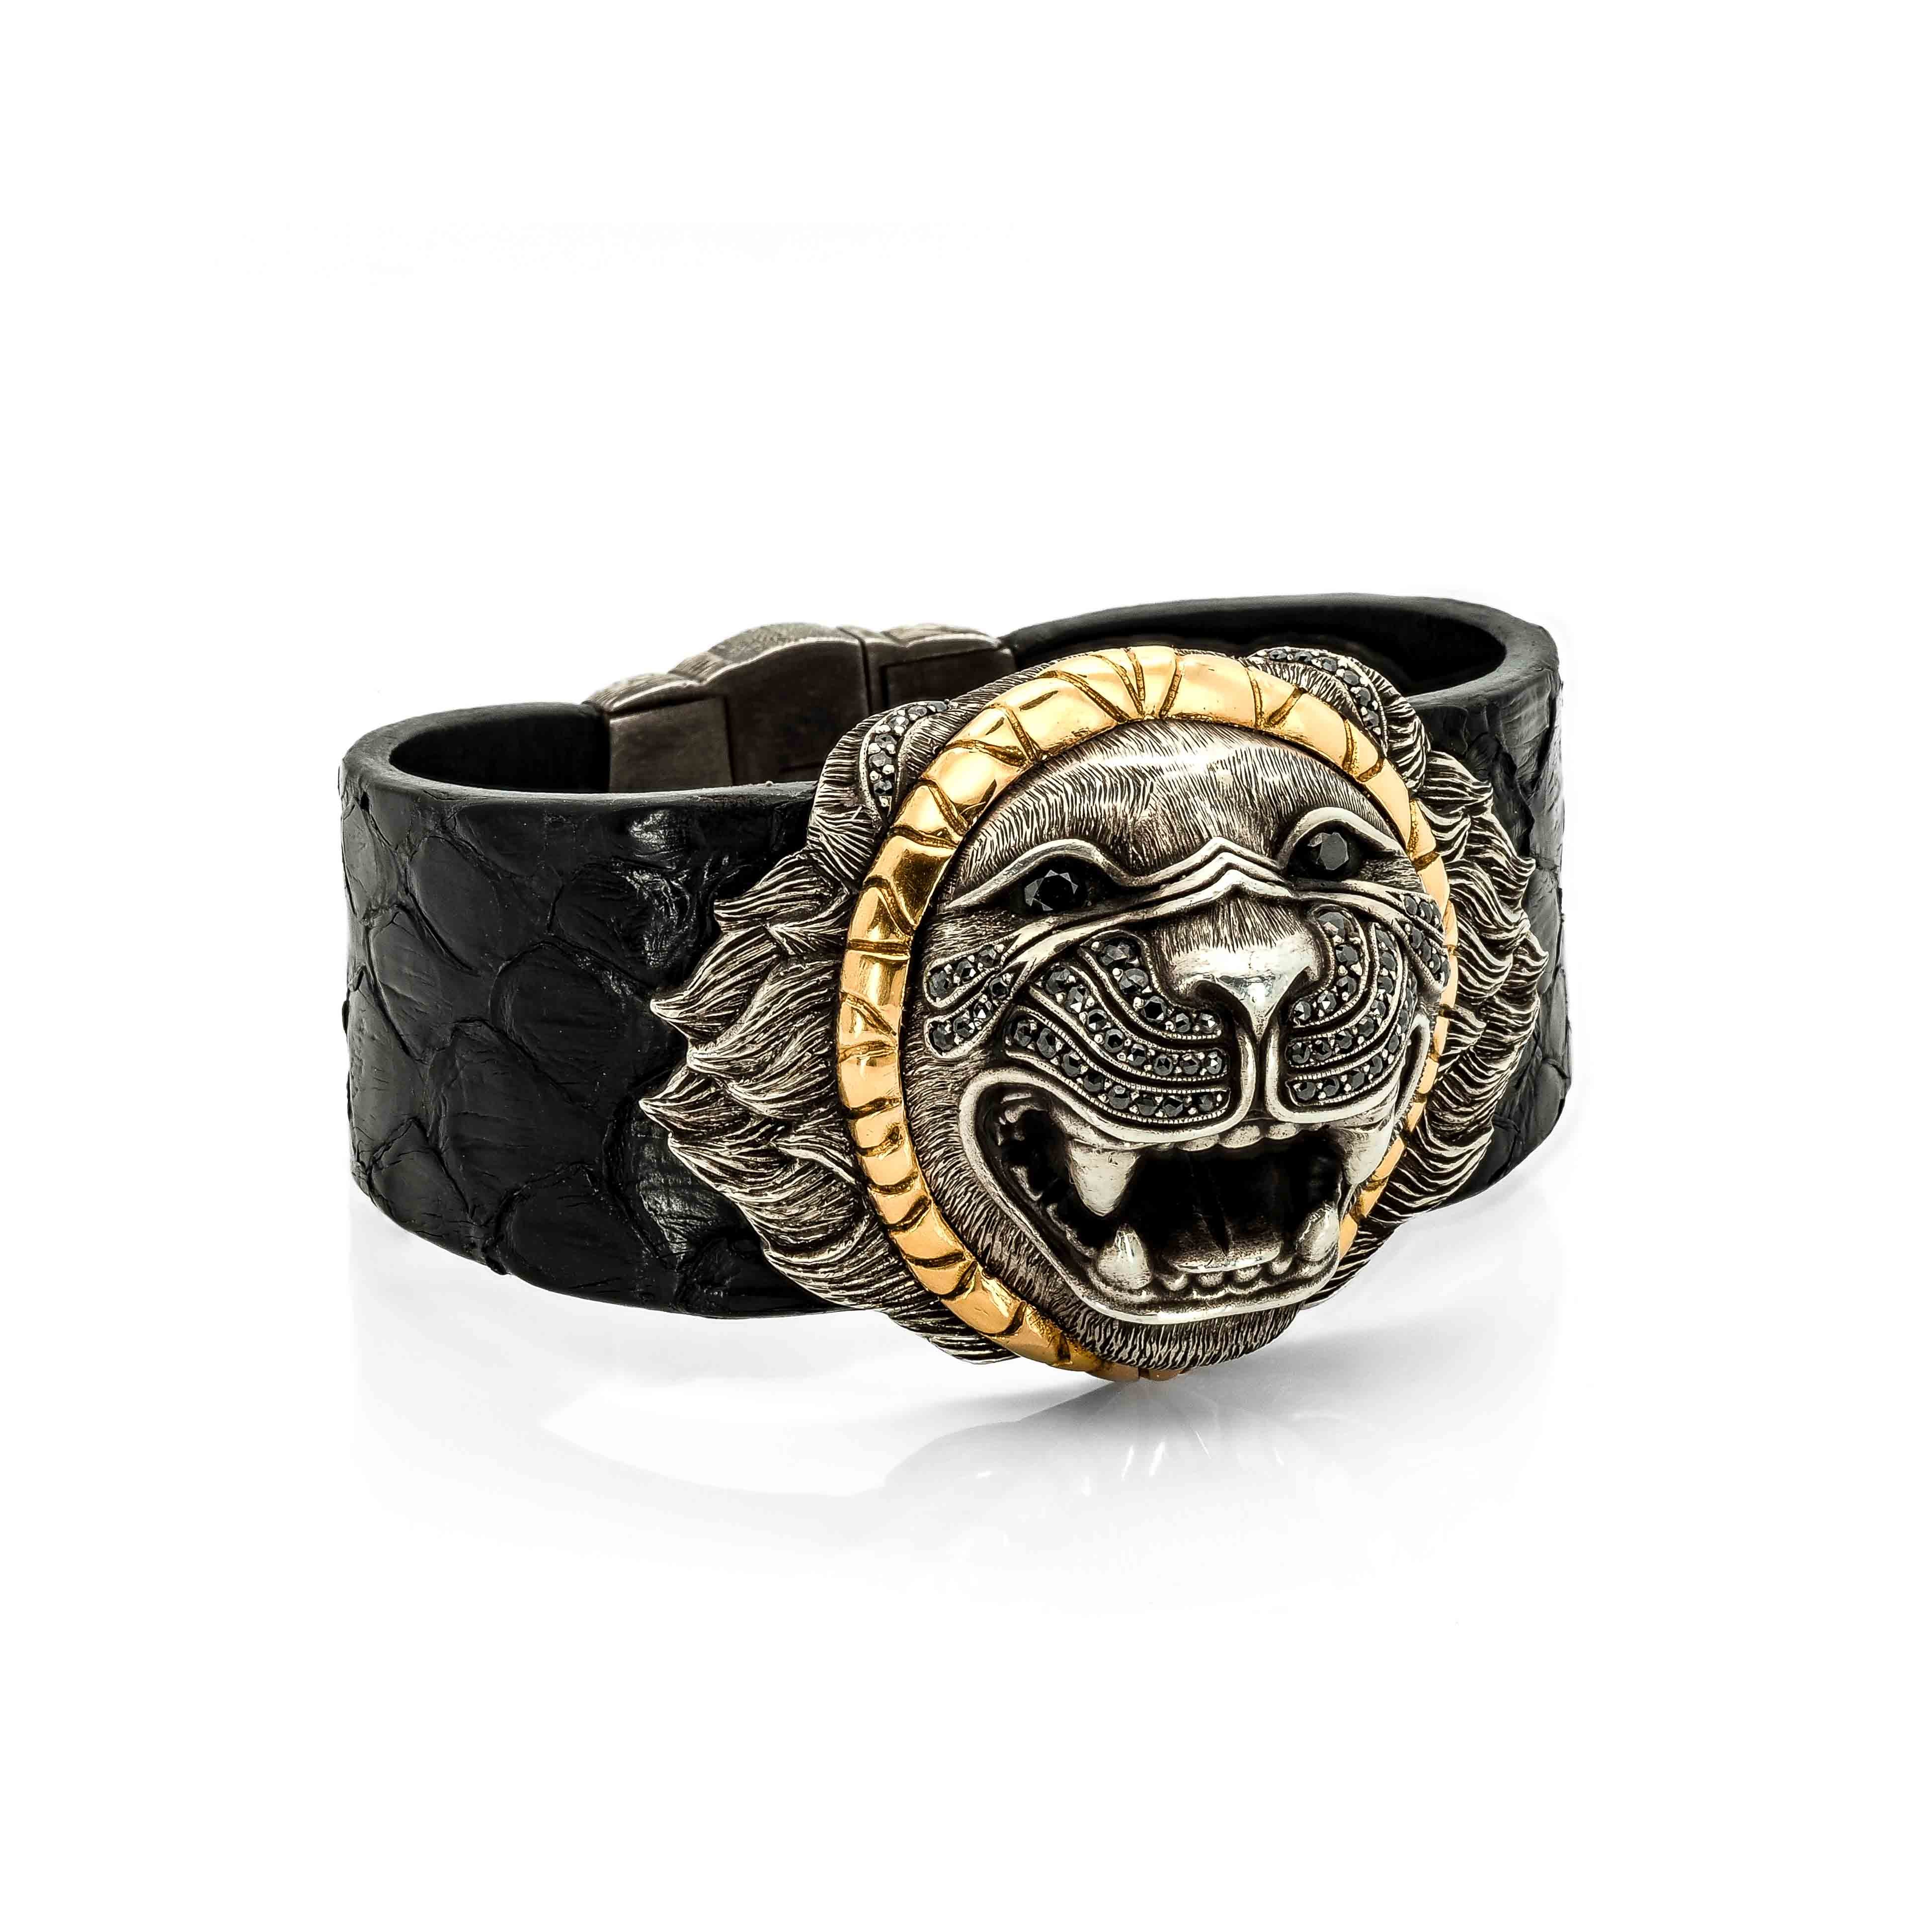 Lion Bracelet with Black Diamonds